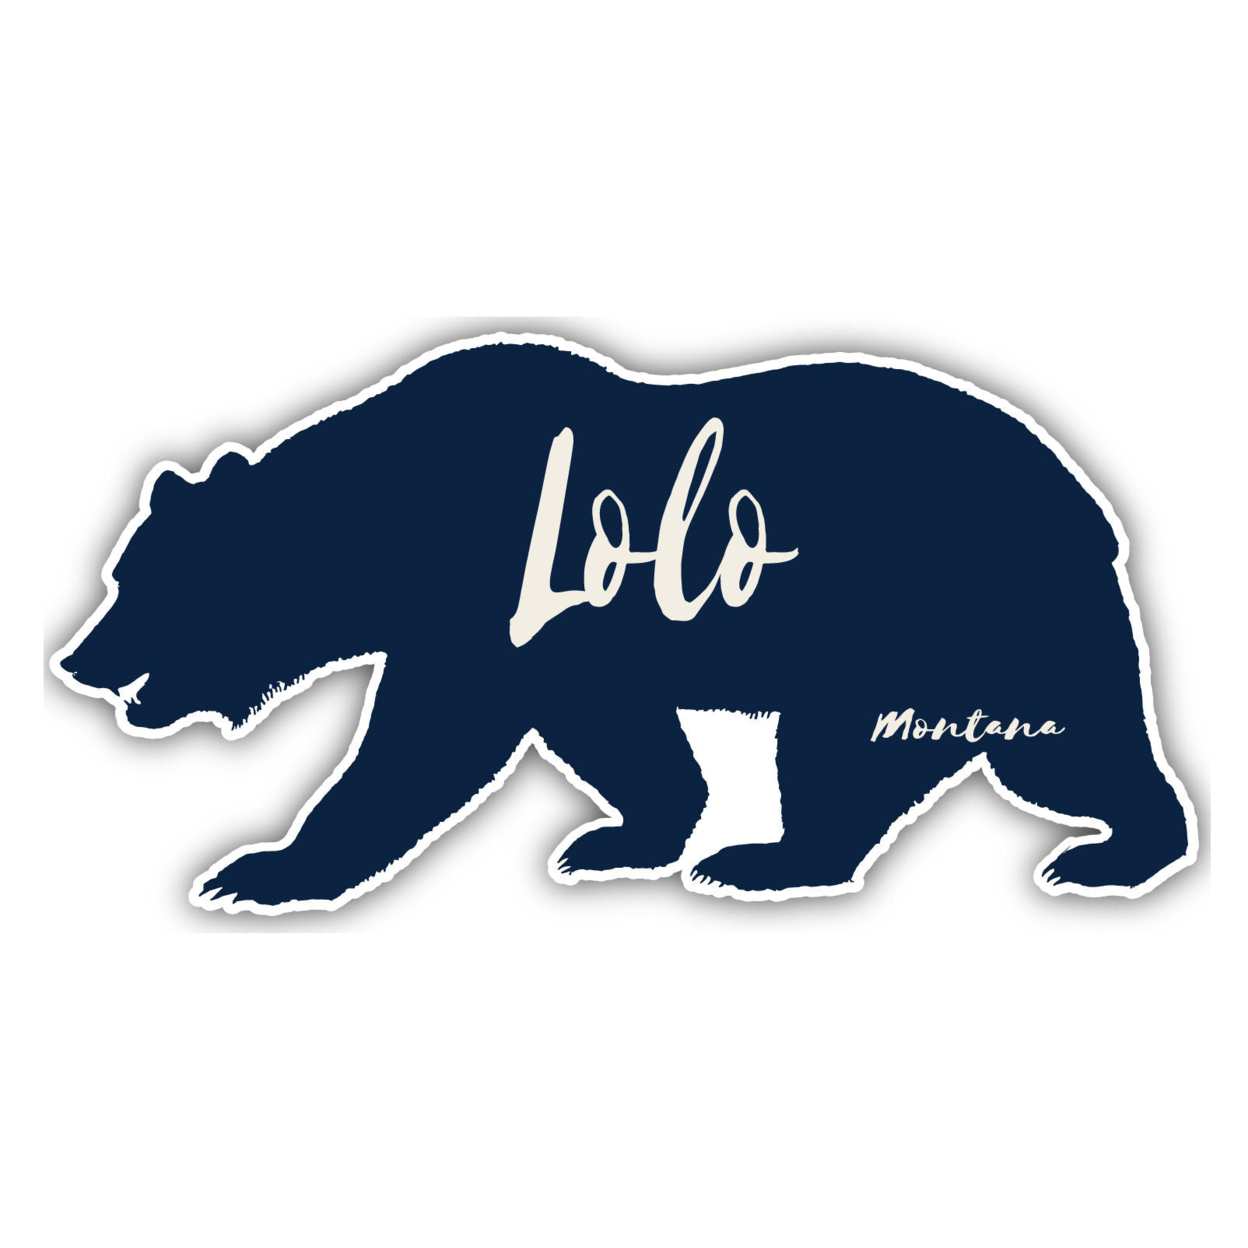 Lolo Montana Souvenir Decorative Stickers (Choose Theme And Size) - 2-Inch, Bear